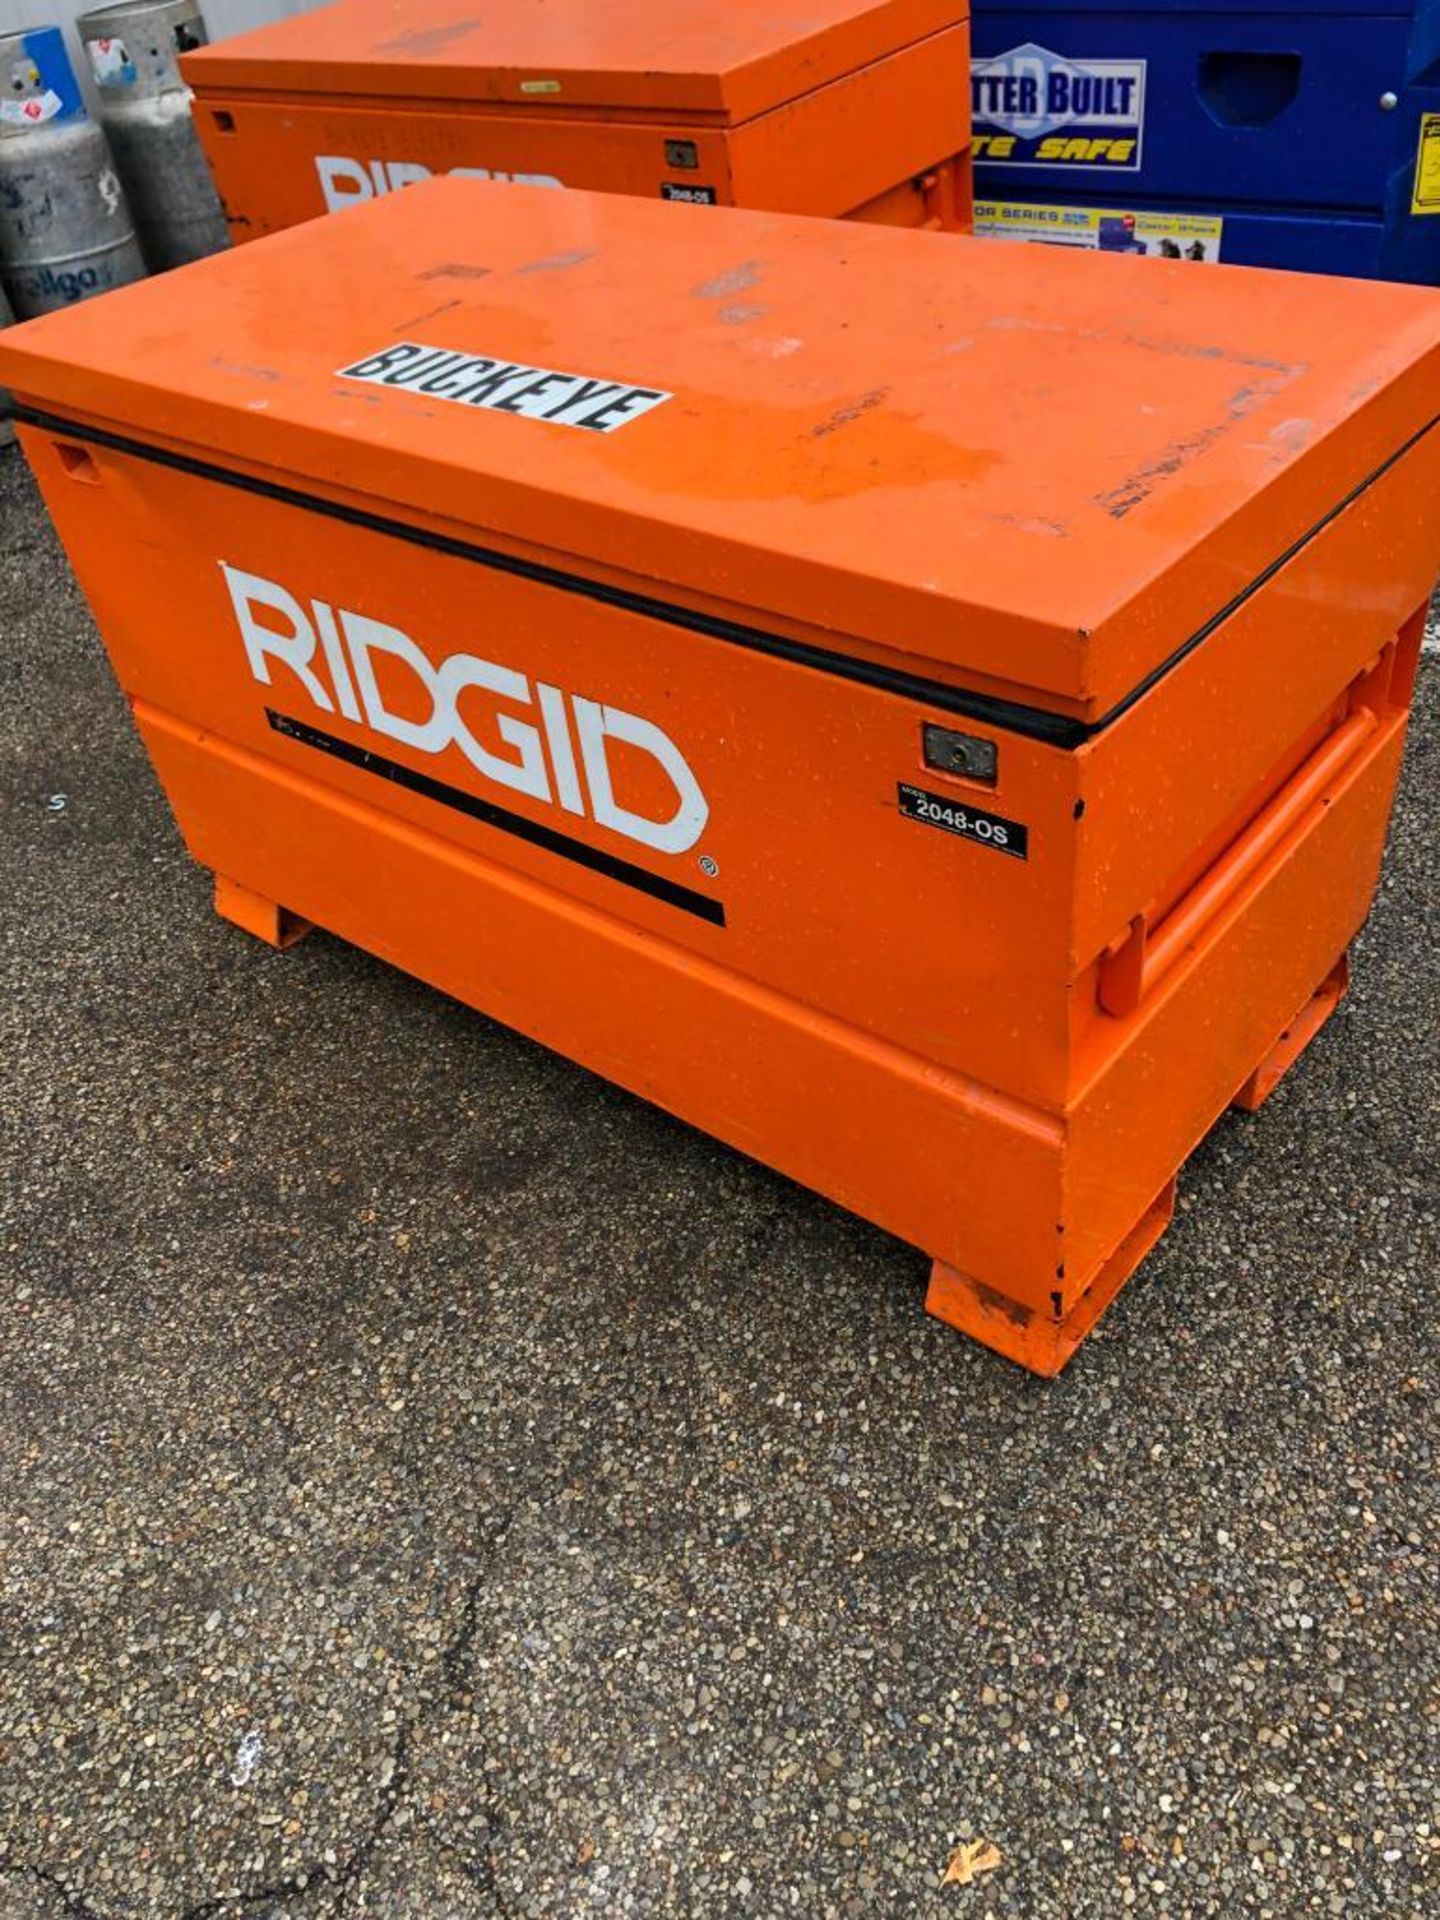 RIDGID JOB BOX, MODEL 2048 OS, S/N 1409413511 - Image 2 of 3